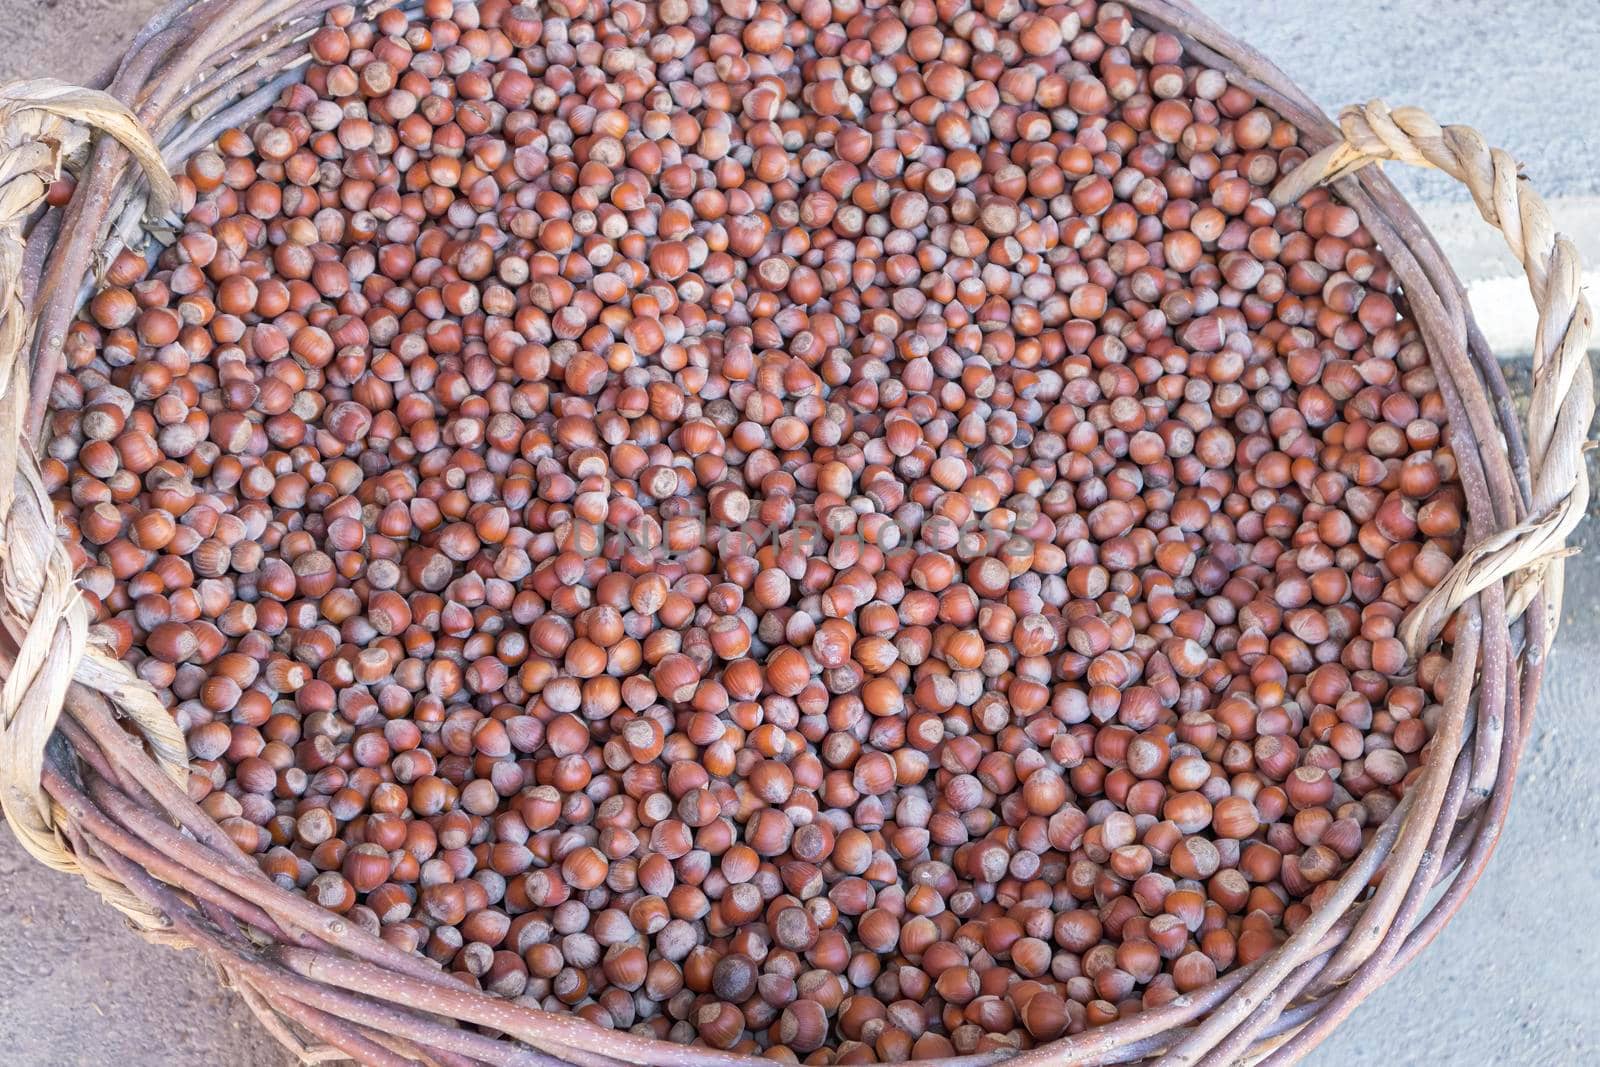 hazelnuts in a large wicker basket close-up by roman112007